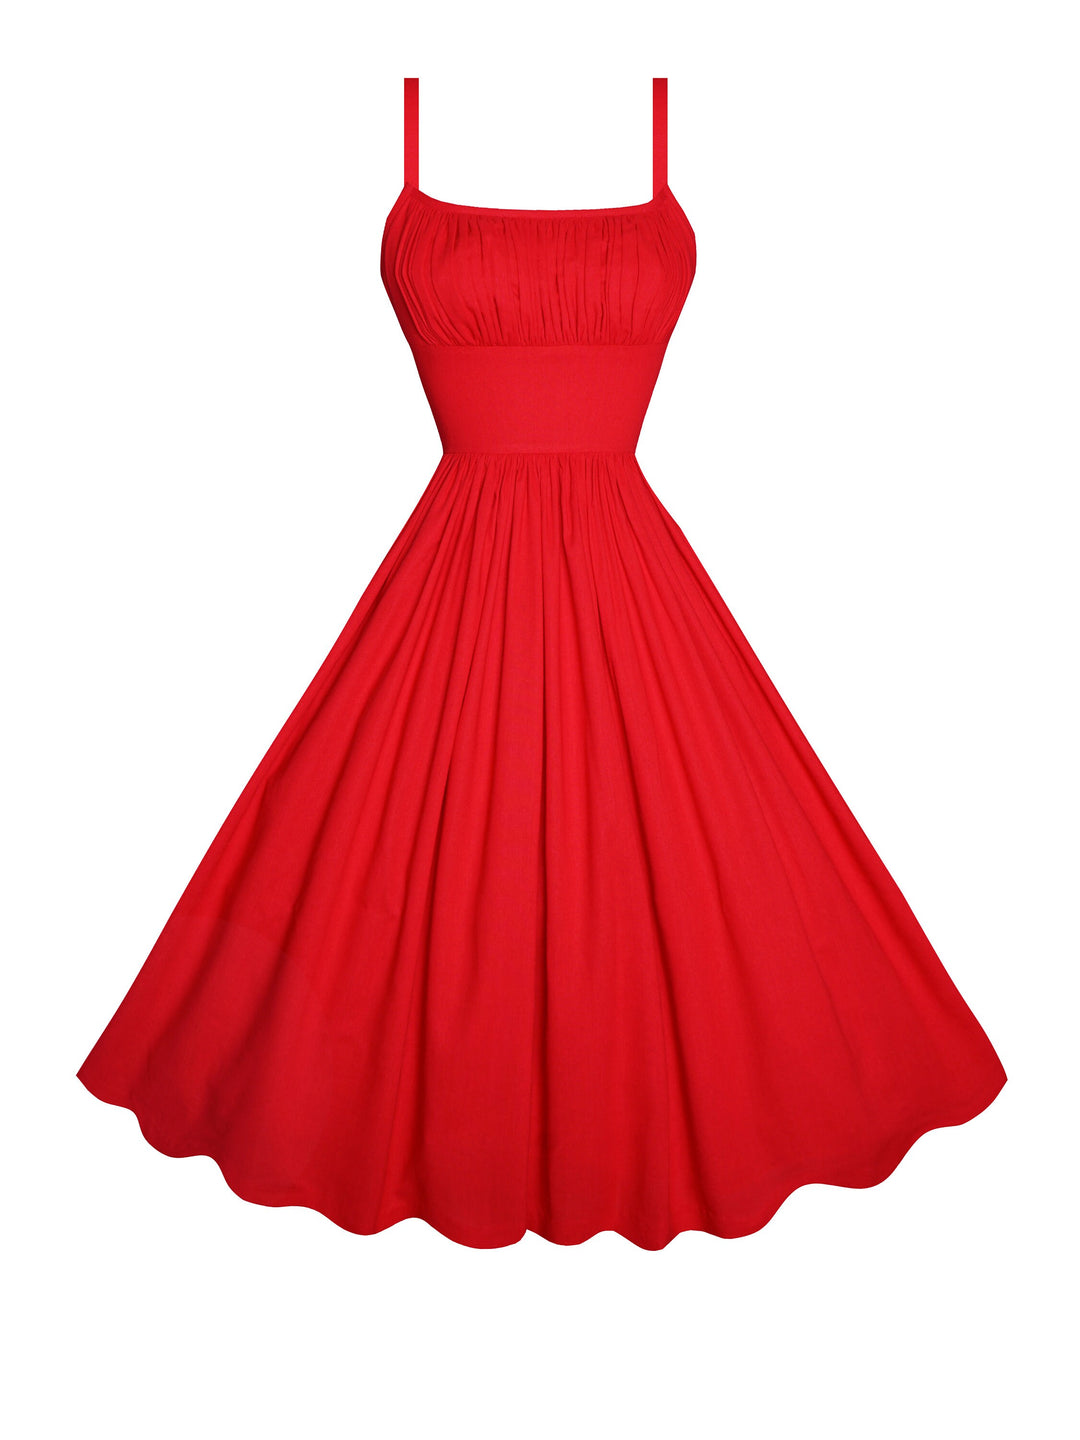 MTO - Grace Dress in Chili Red Linen